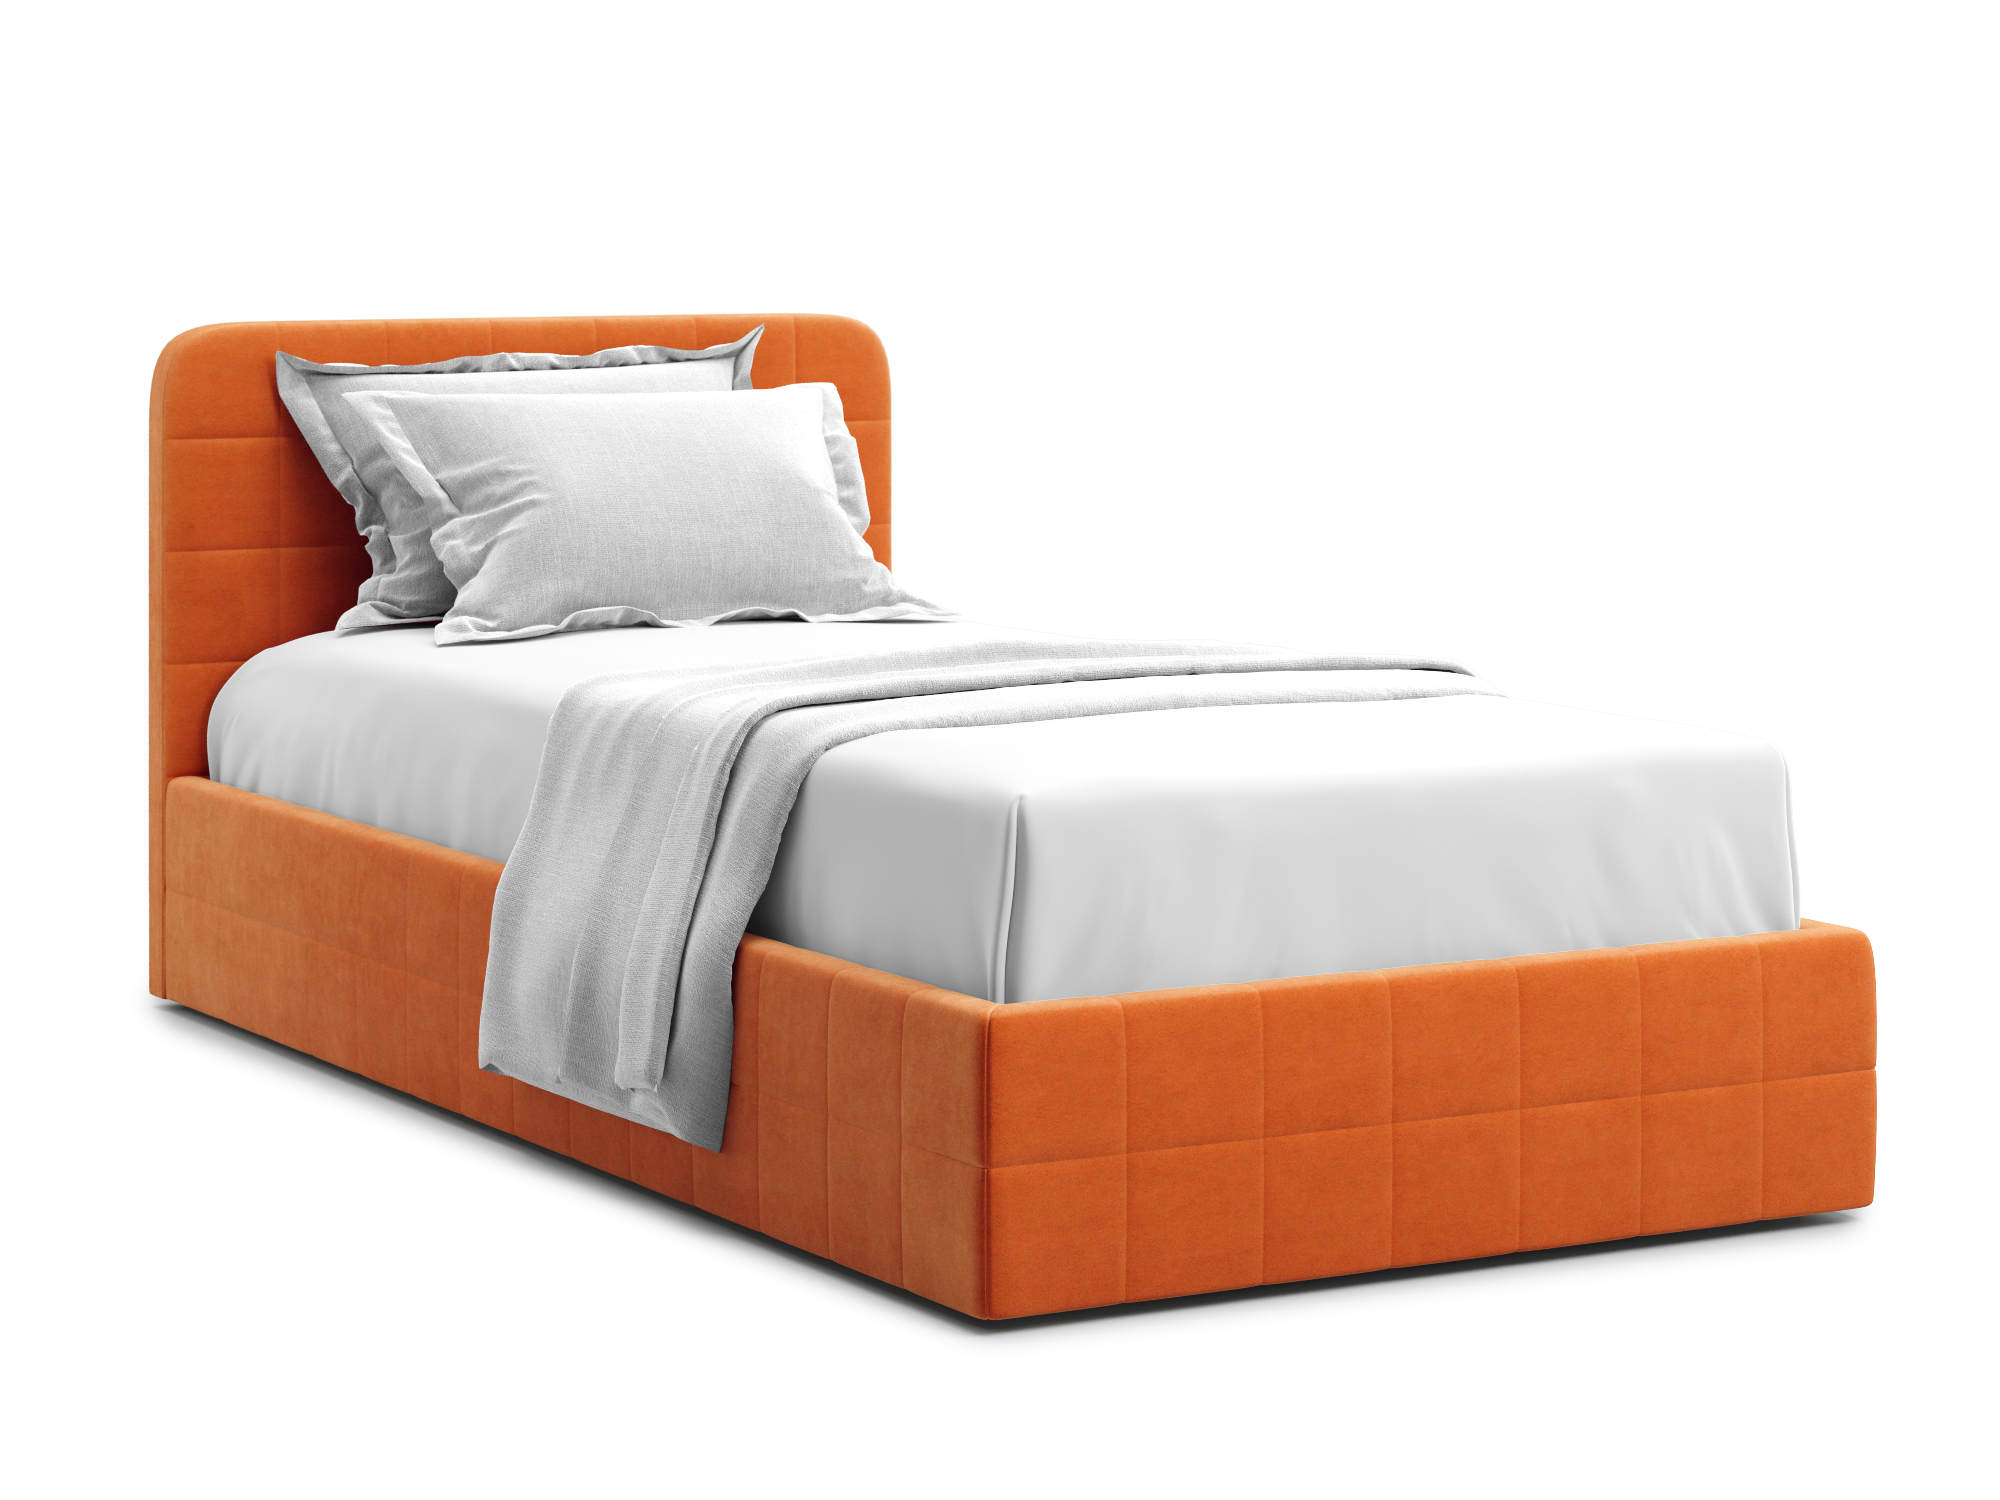 Кровать Adda 120 Velutto 27 Оранжевый, Массив, ДСП кровать adda 120 velutto 26 синий массив дсп